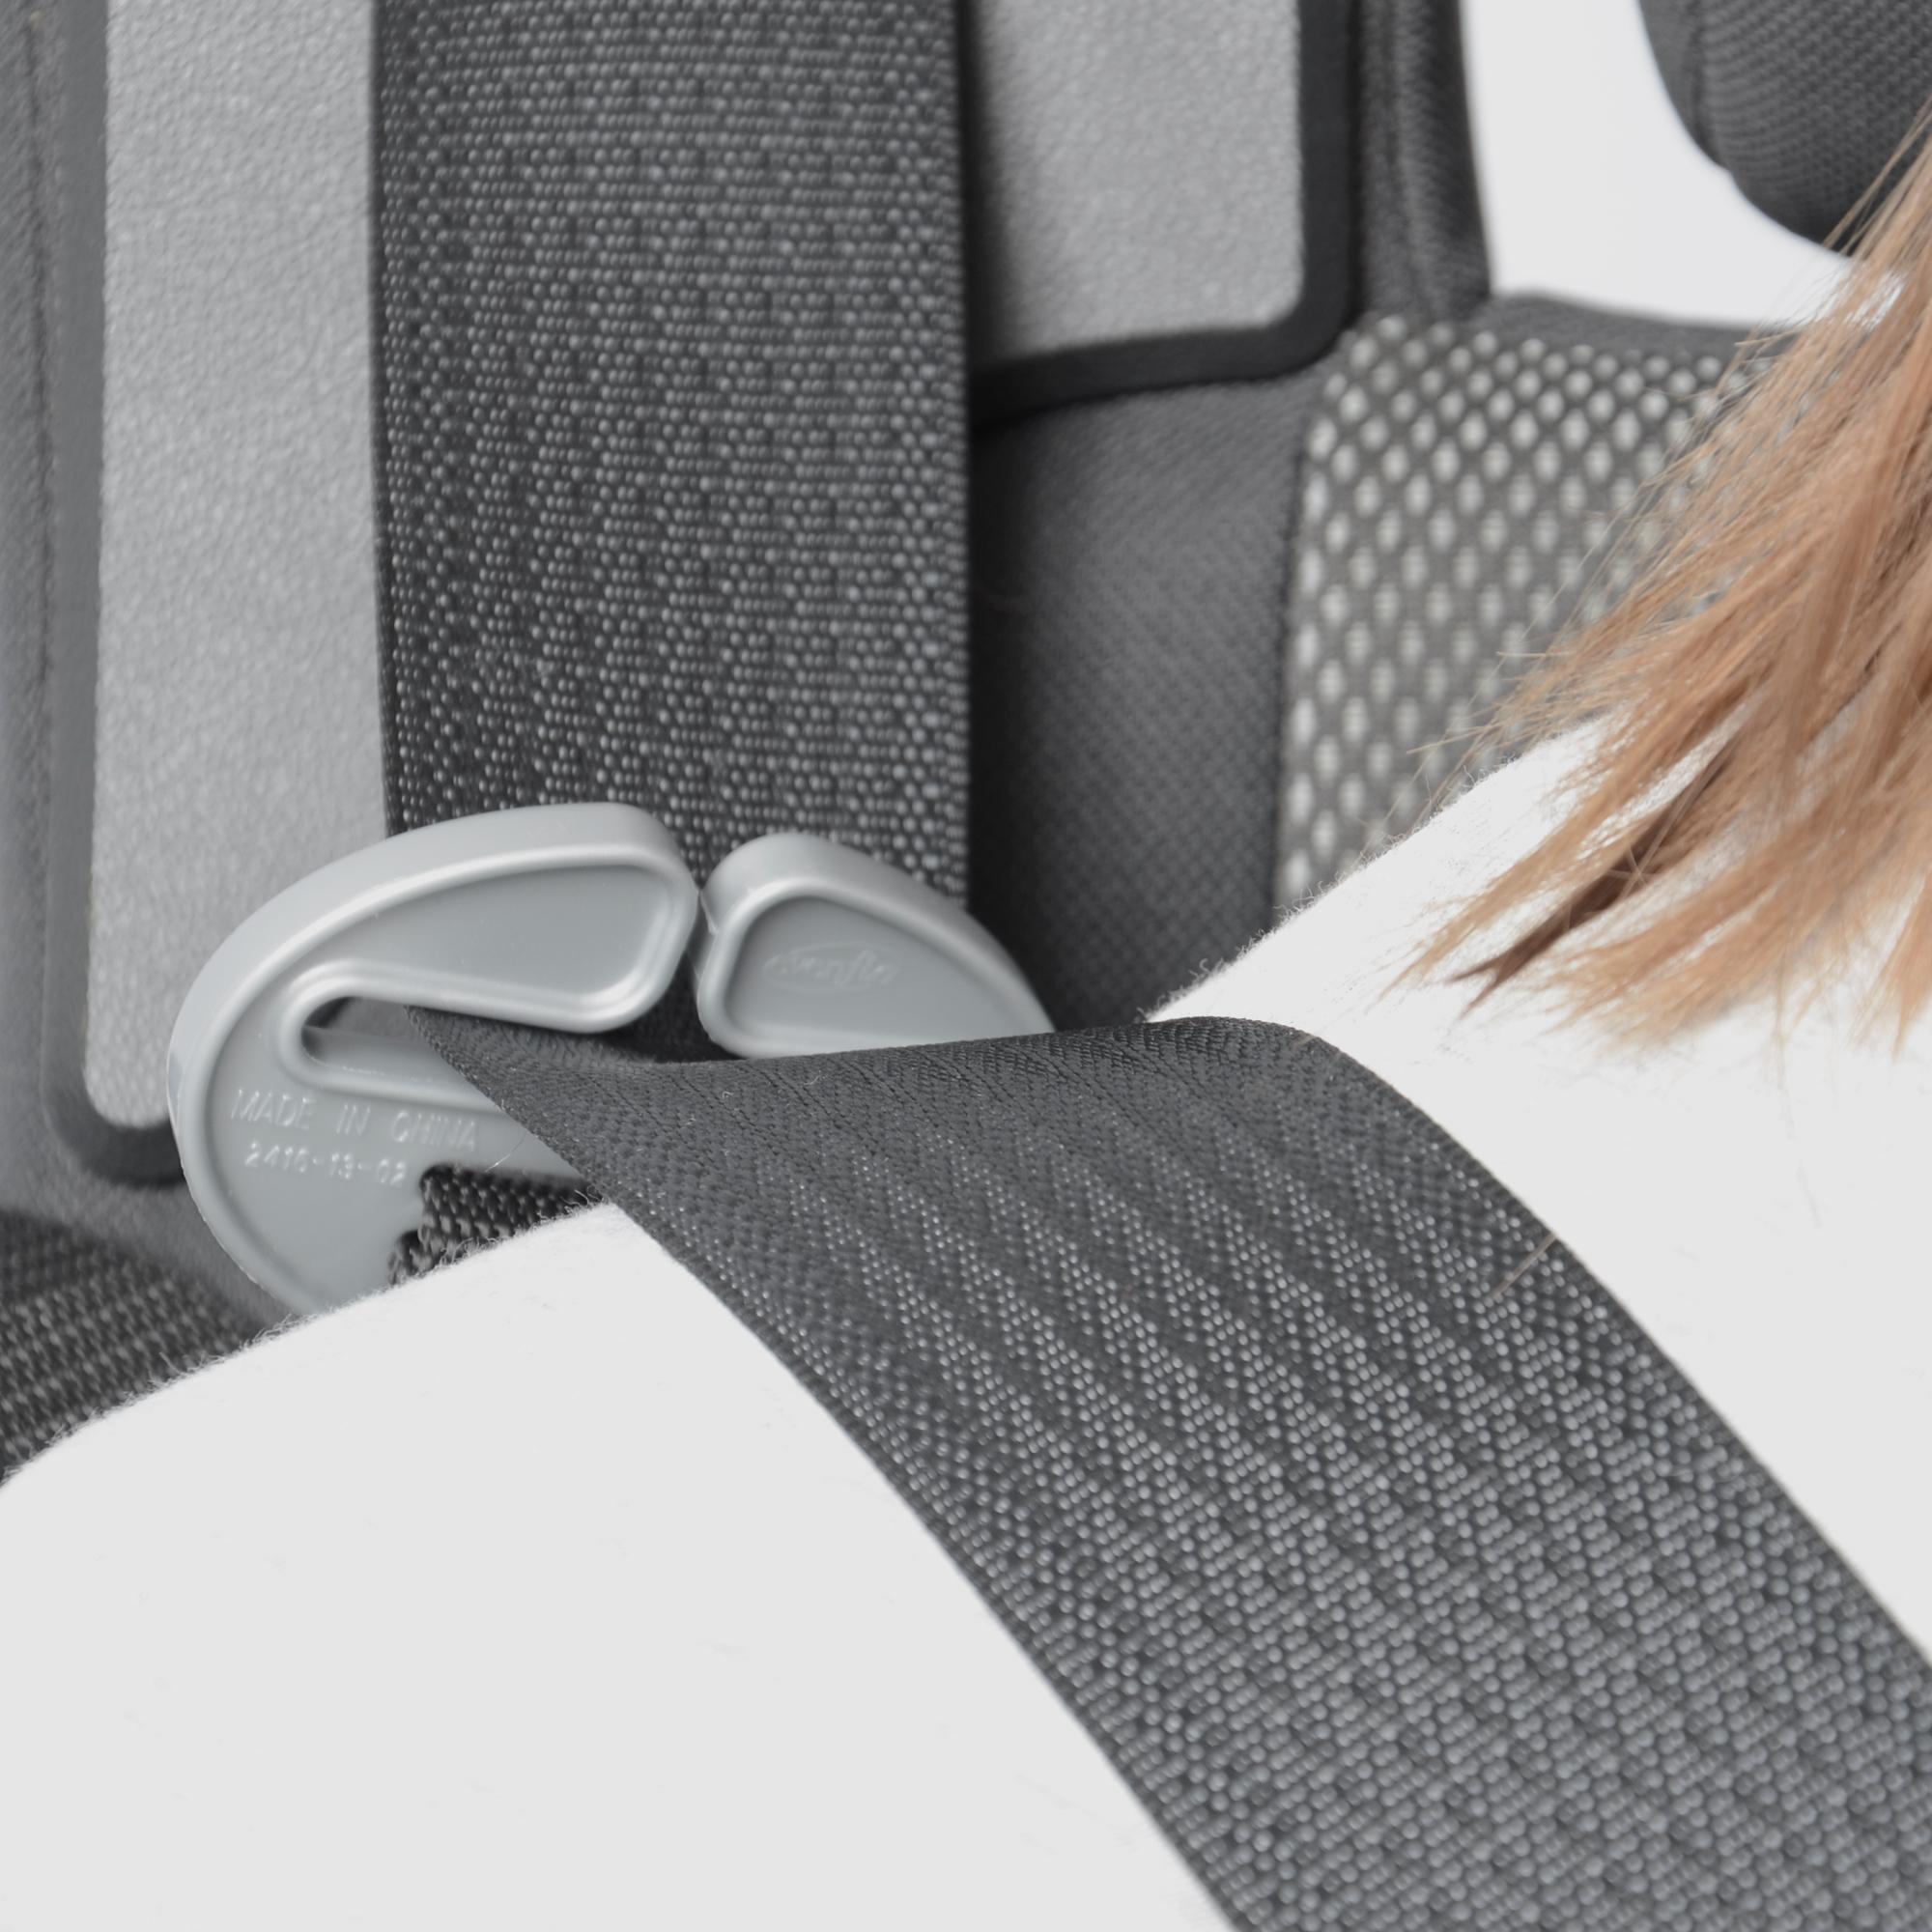 evenflo car seat belt instructions